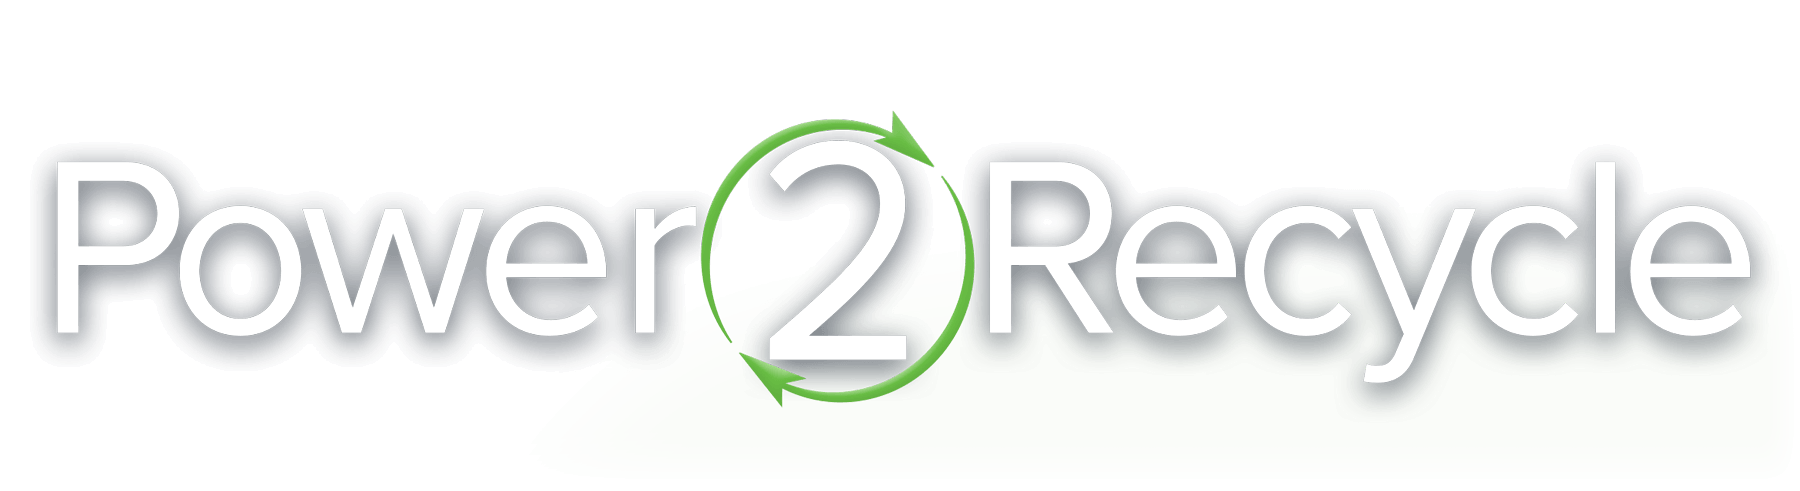 Power2Recycle logo